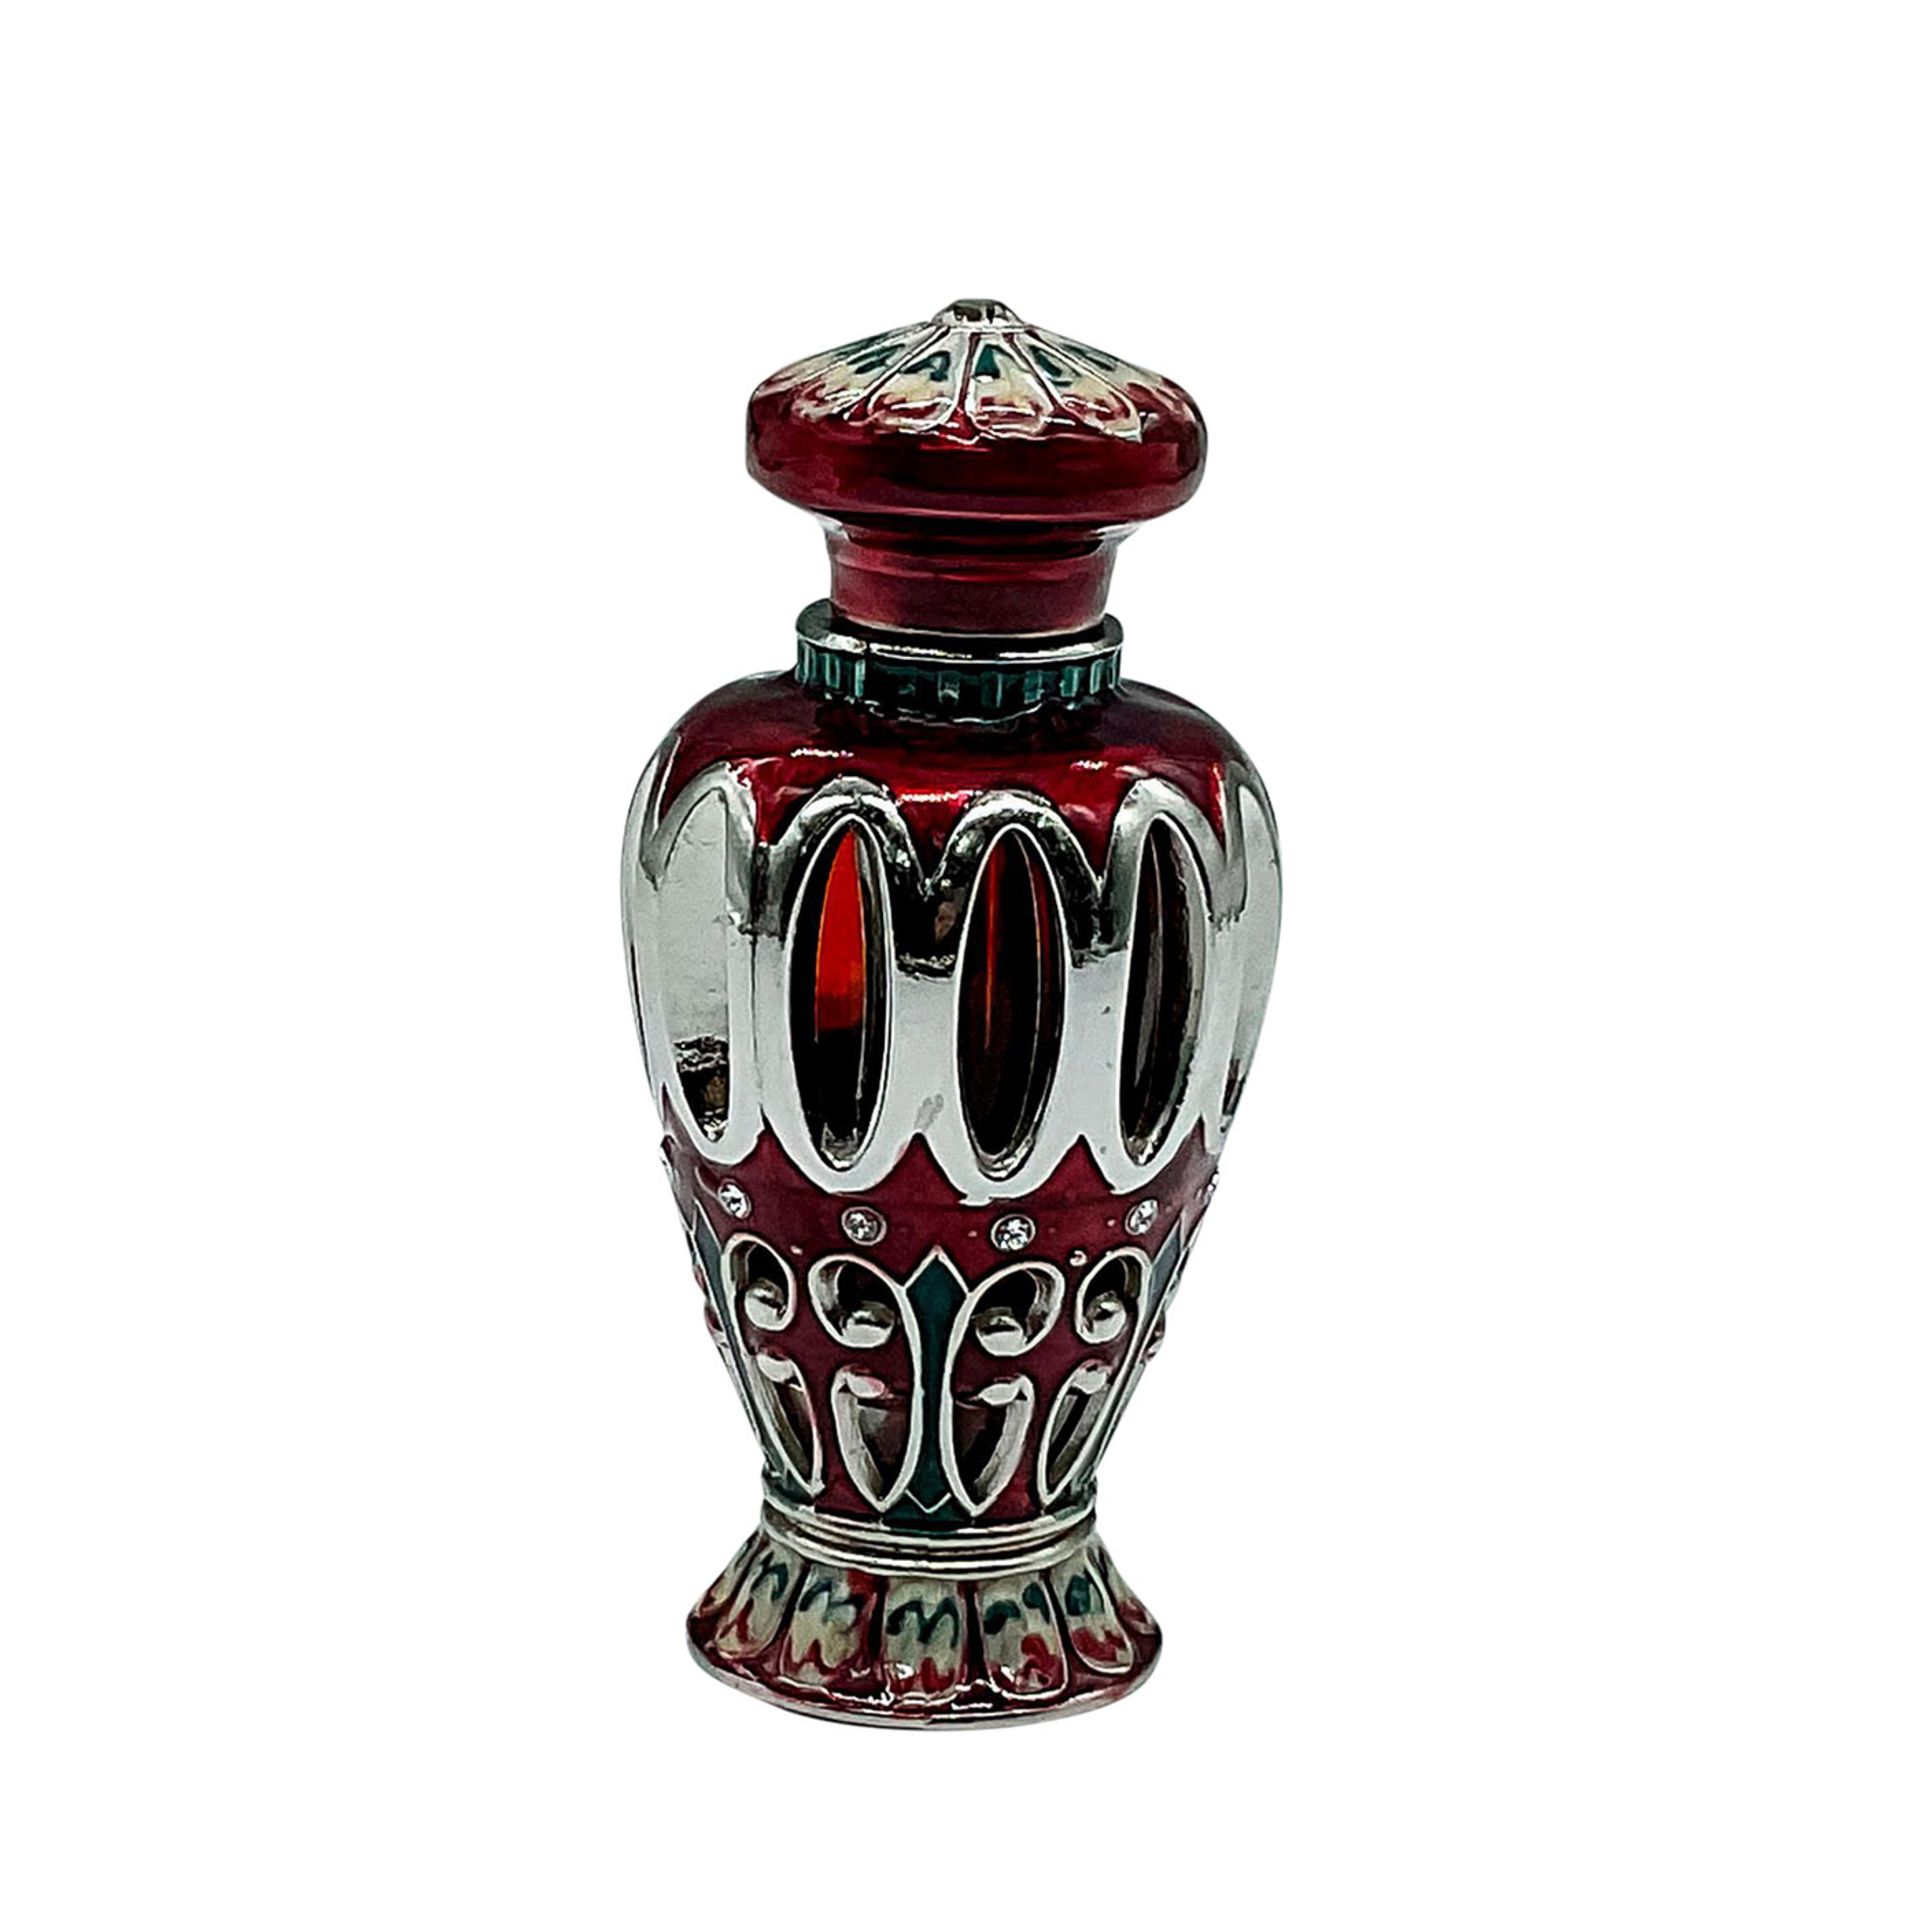 Vintage Middle Eastern Enamel Perfume Bottle with Stopper